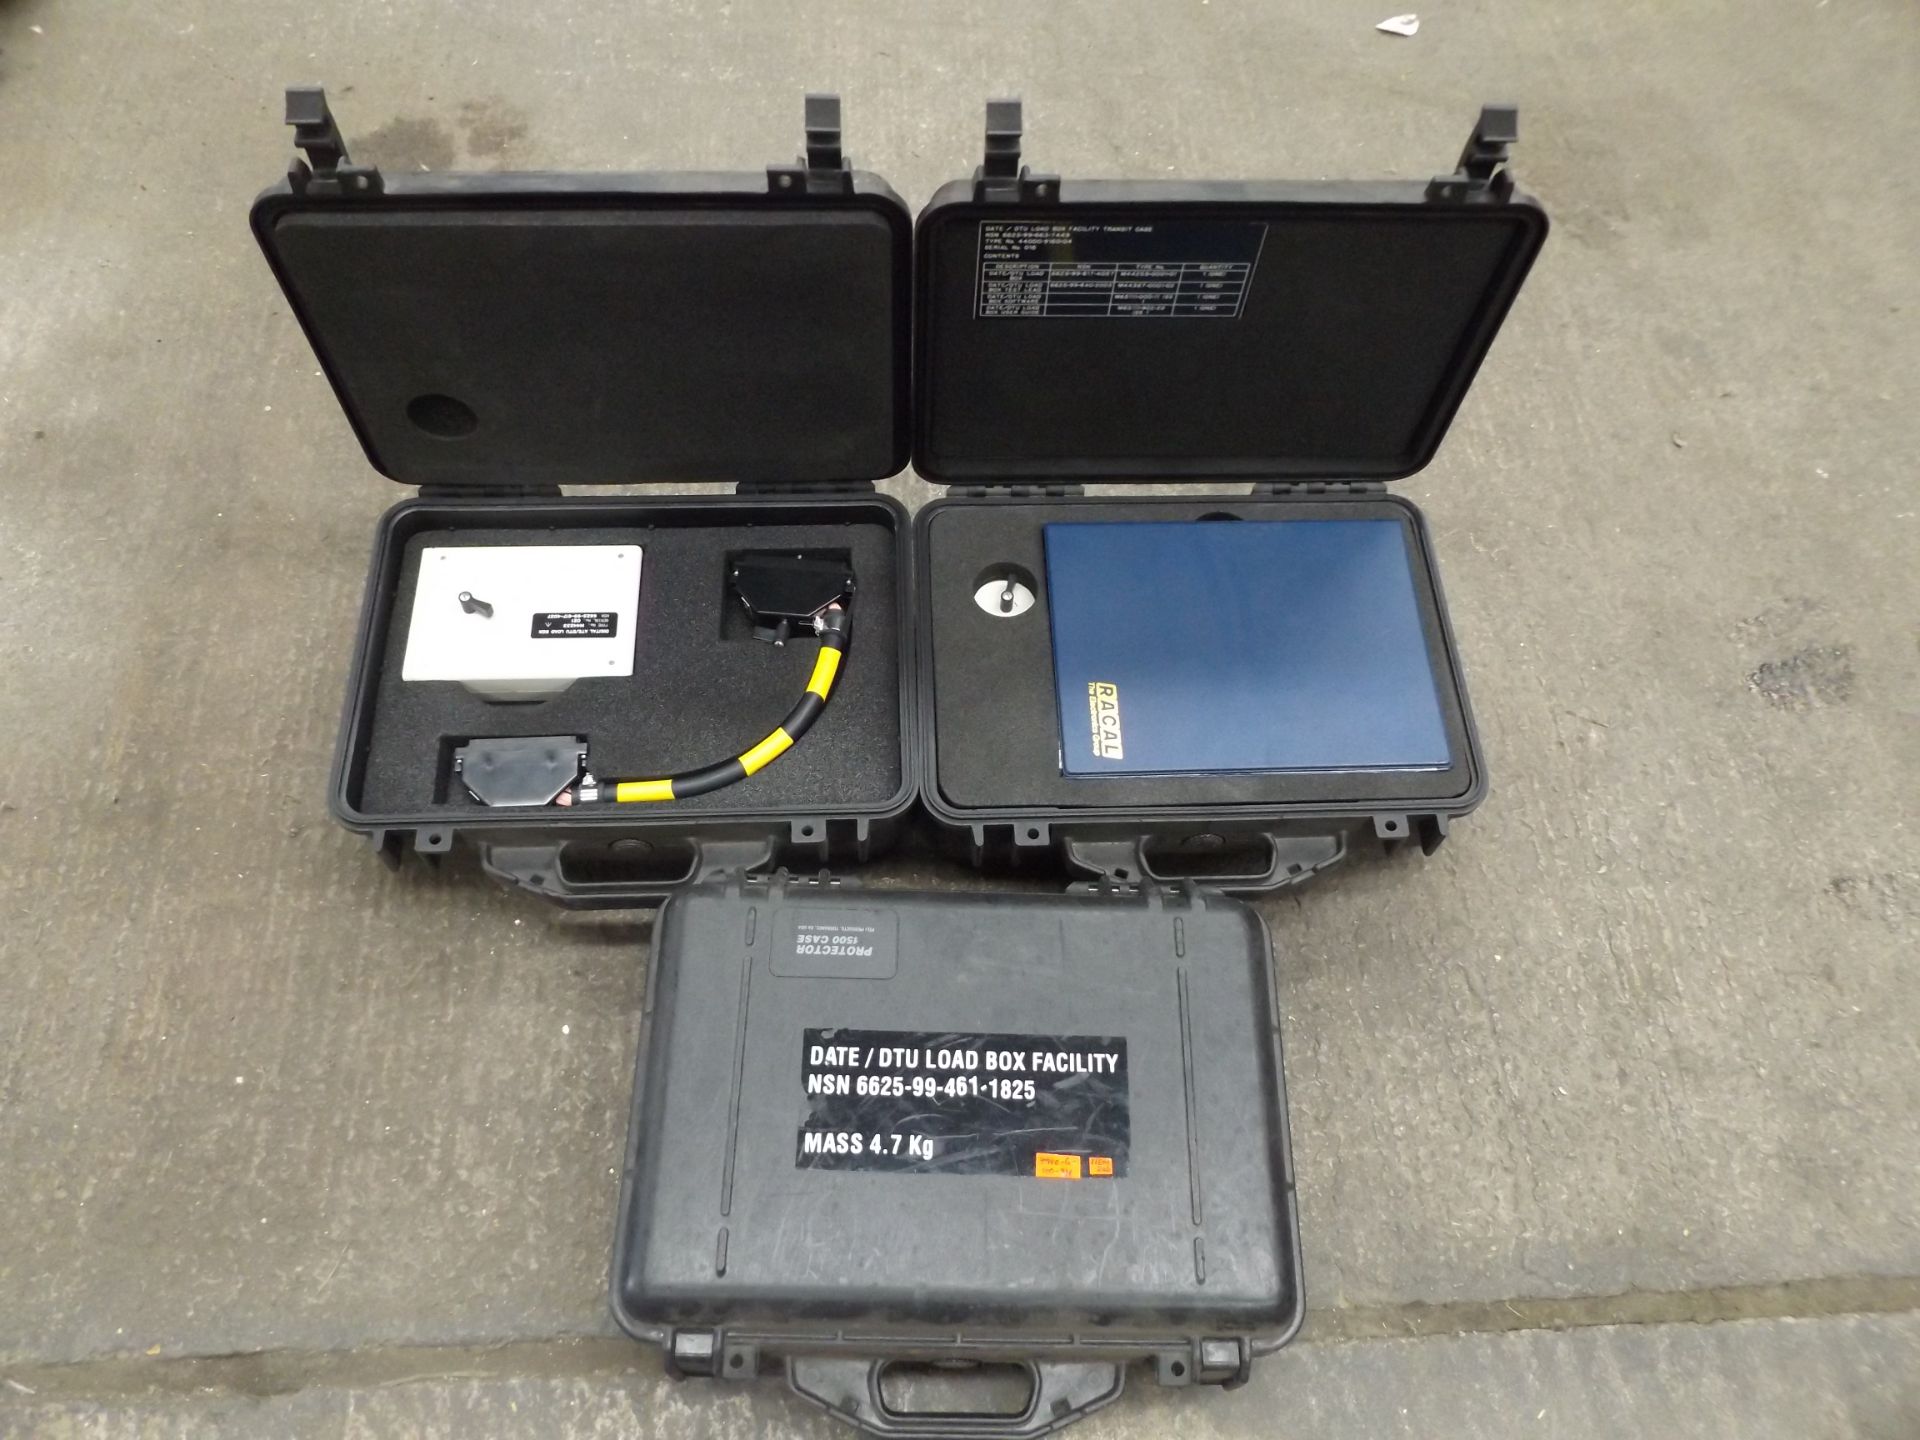 3 x Racal DTU Load Box Facilities in Peli Protector 1500 Cases